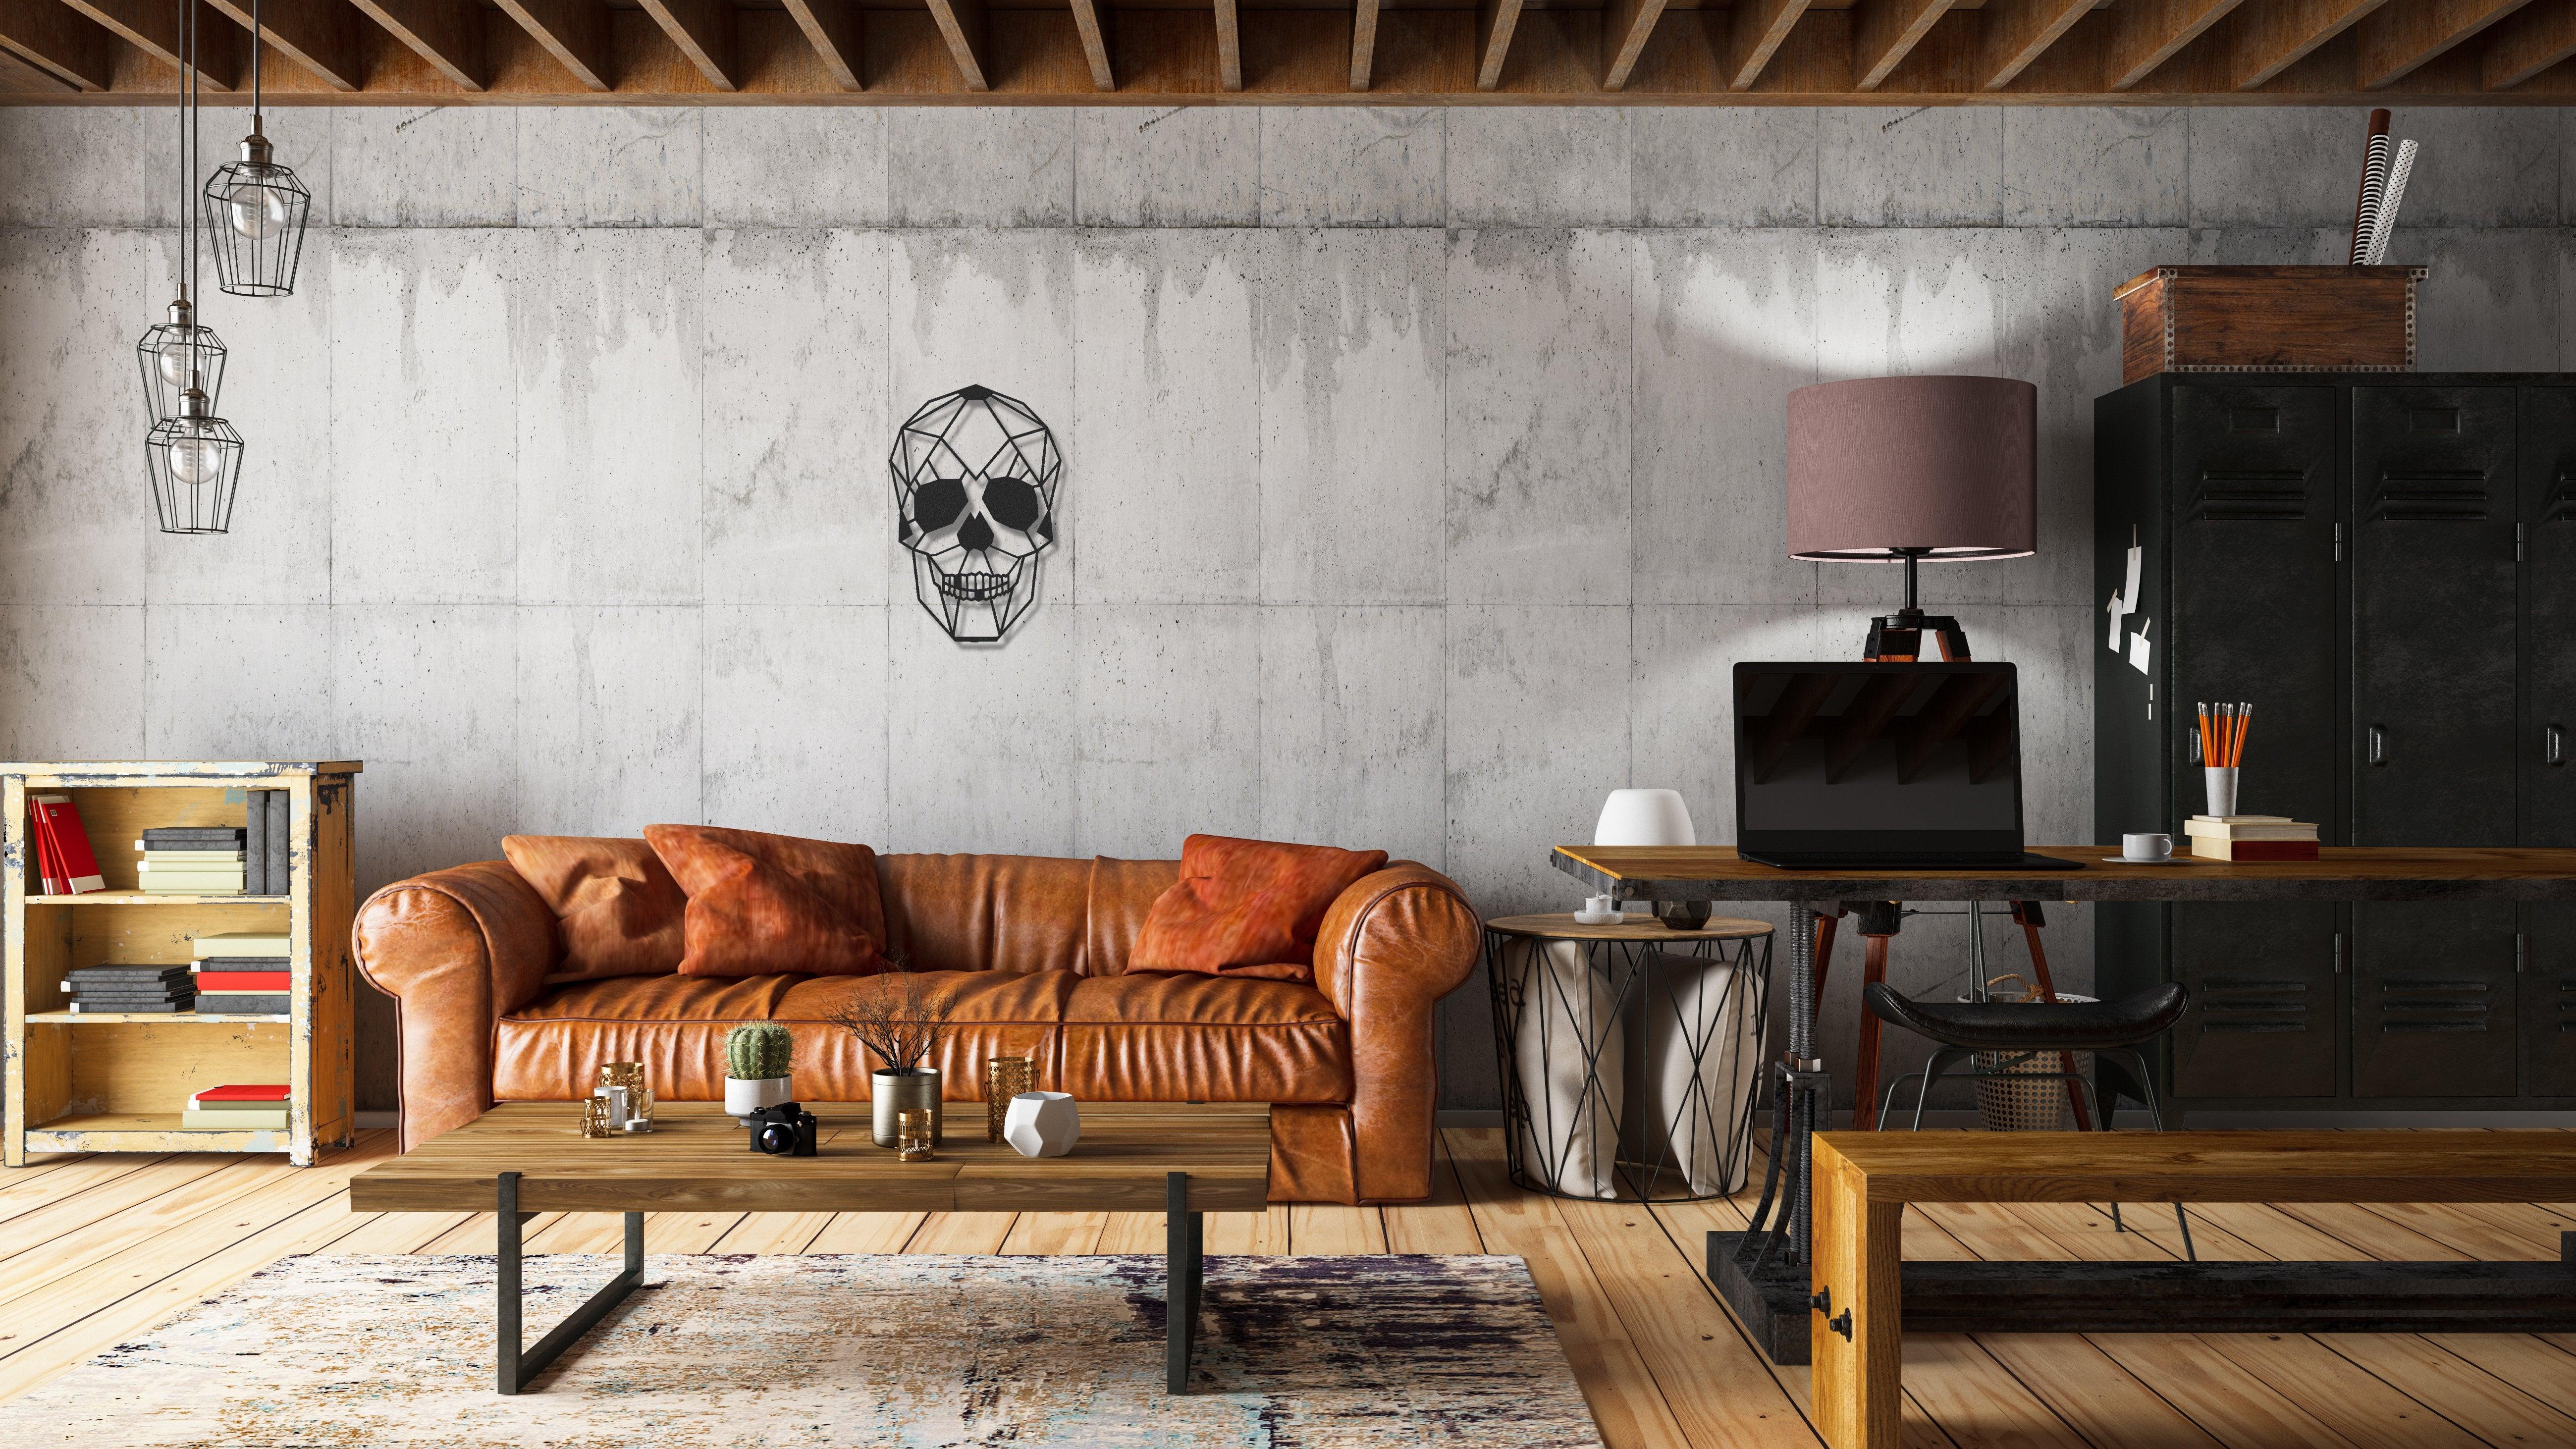 ・"Skull"・Premium Metal Wall Art - Limited Edition - ArtDesigna Glass Printing Wall Art